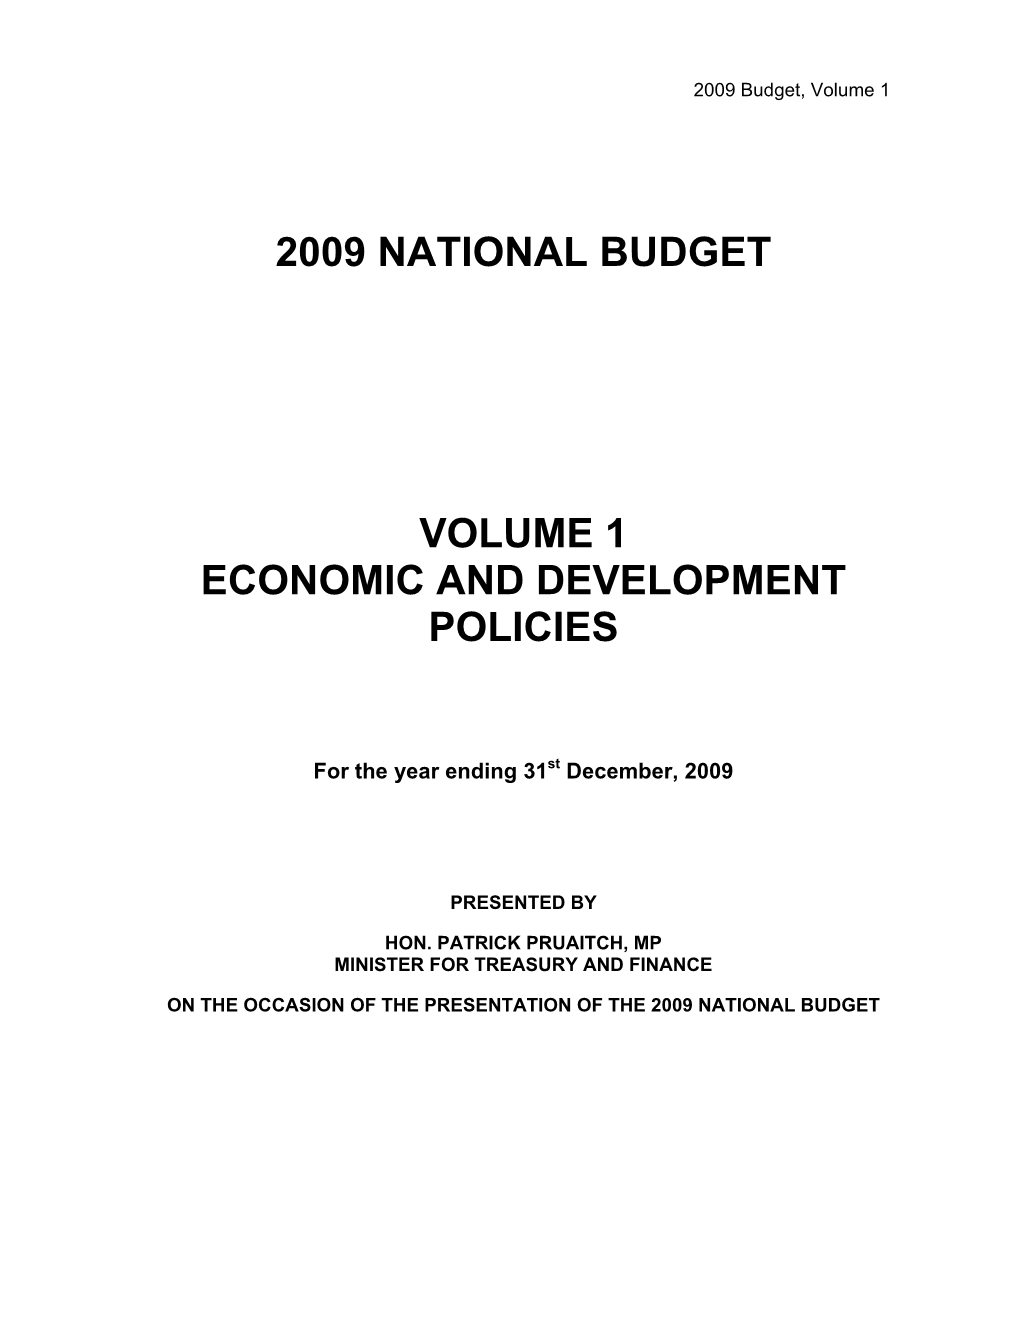 2009 National Budget Volume 1 Economic and Development